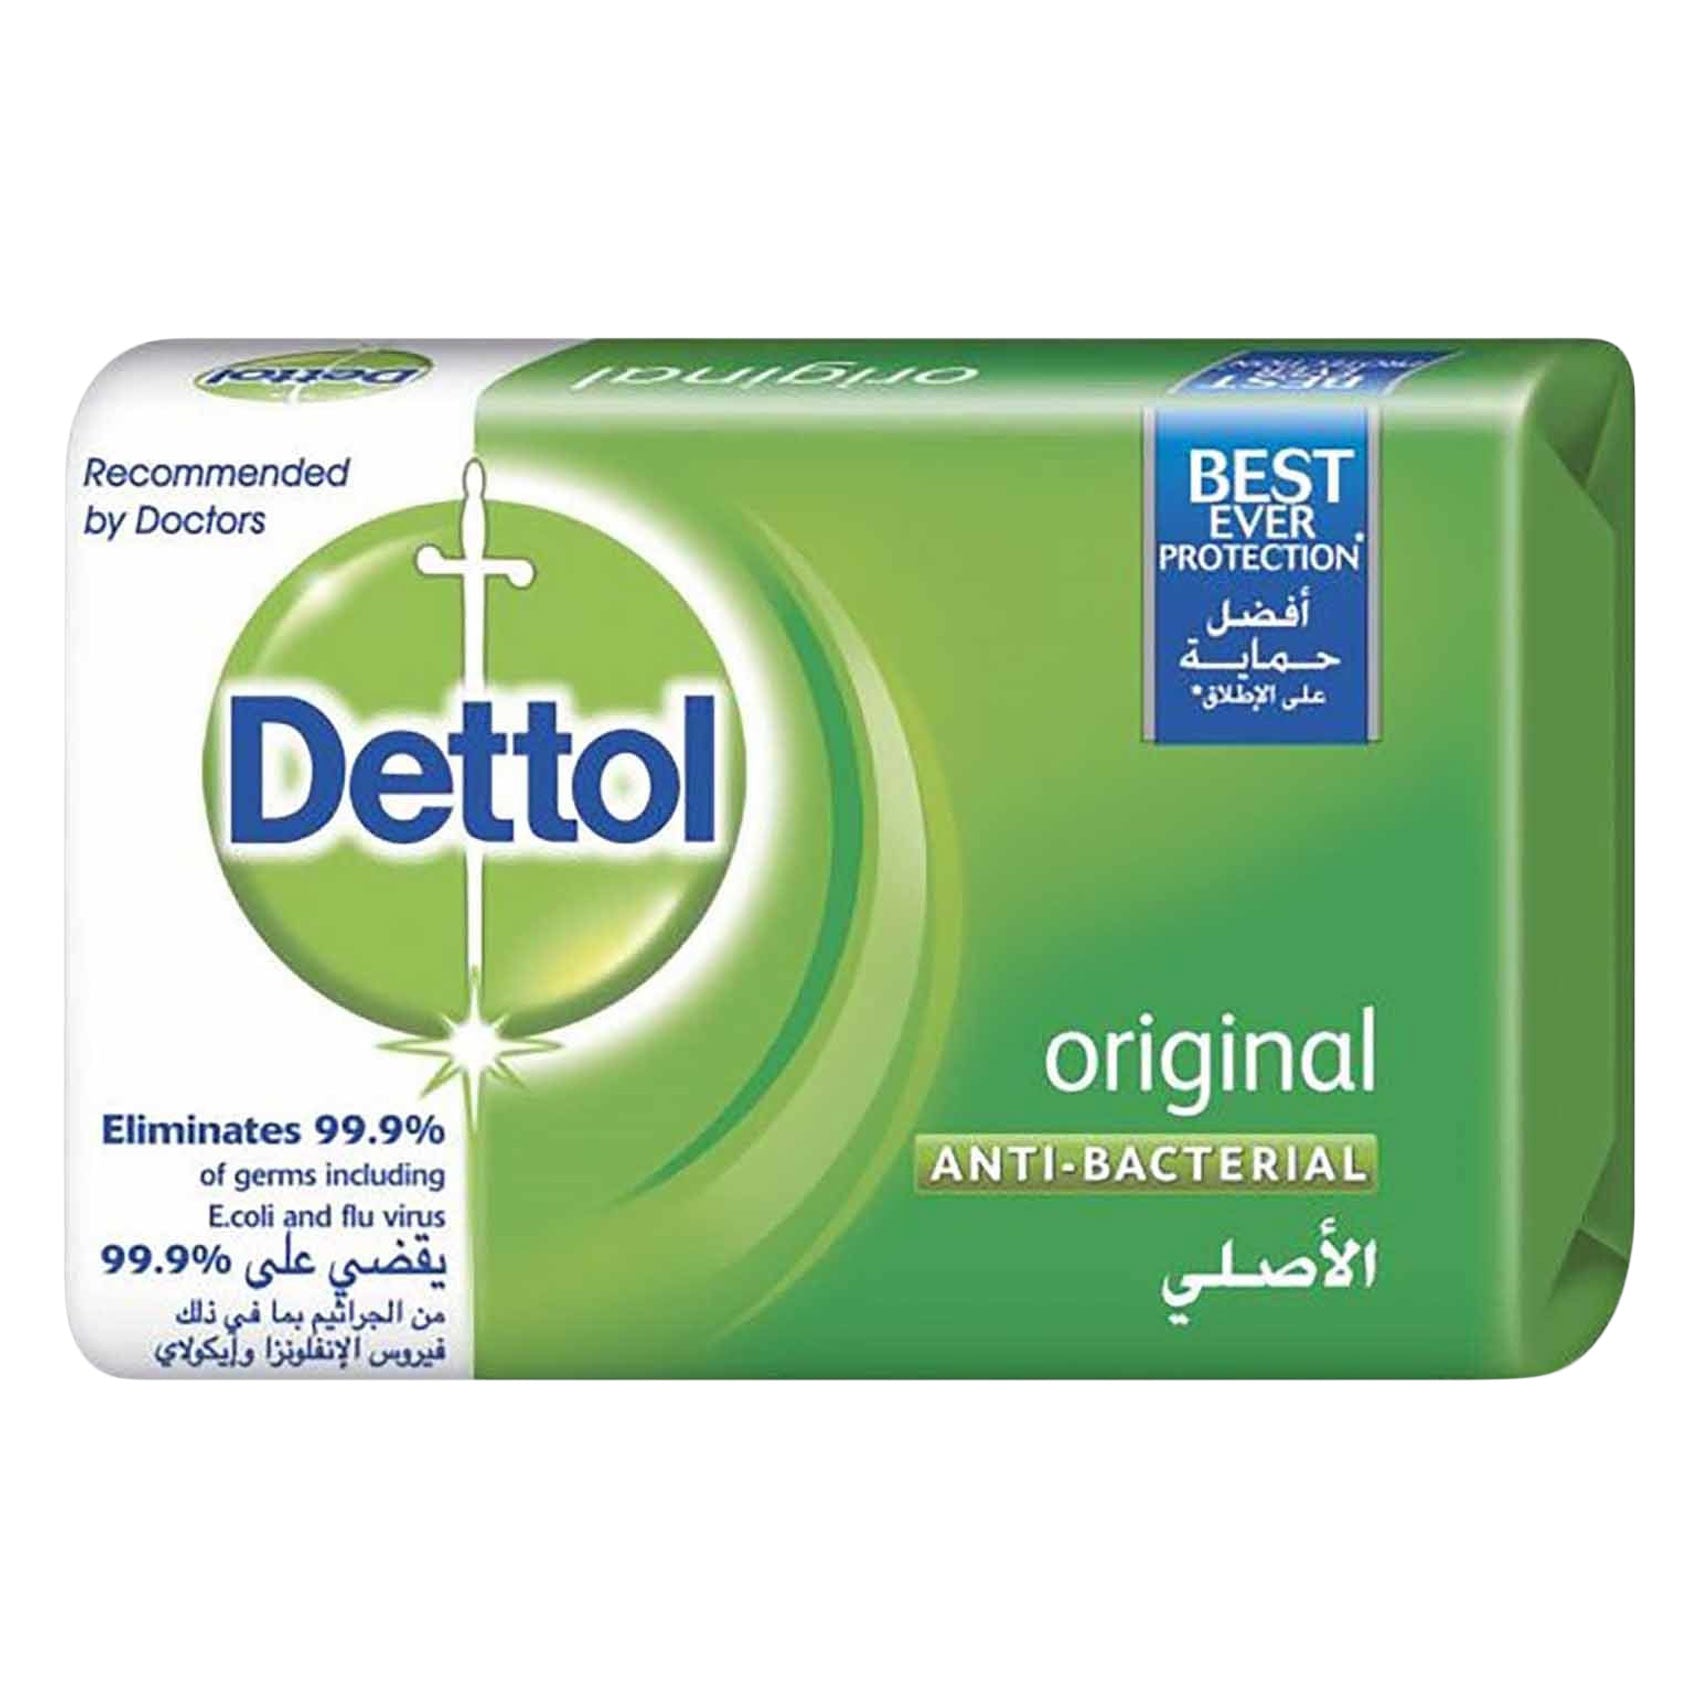 Dettol - Antibacterial Soap Original | MazenOnline